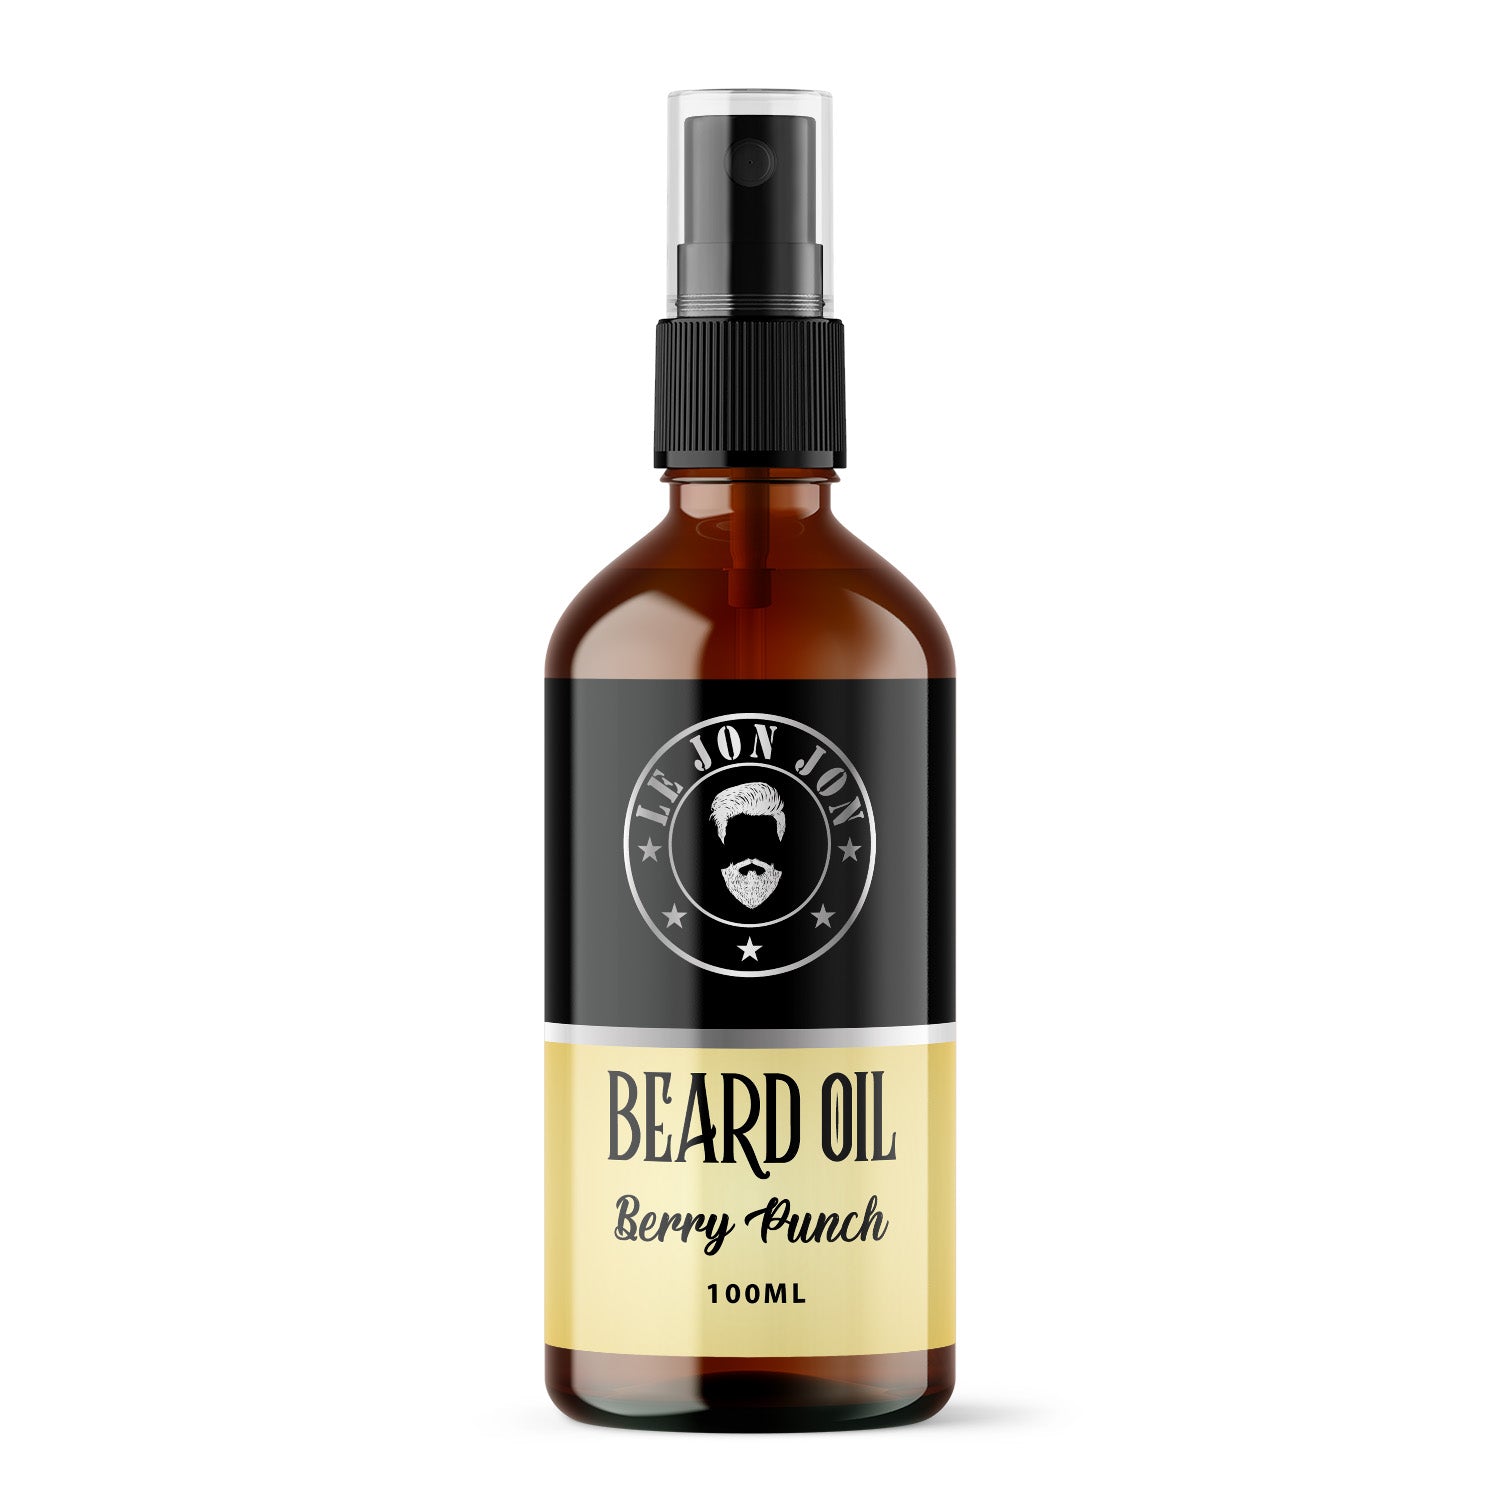 Berry punch 100ml bottle of beard oil